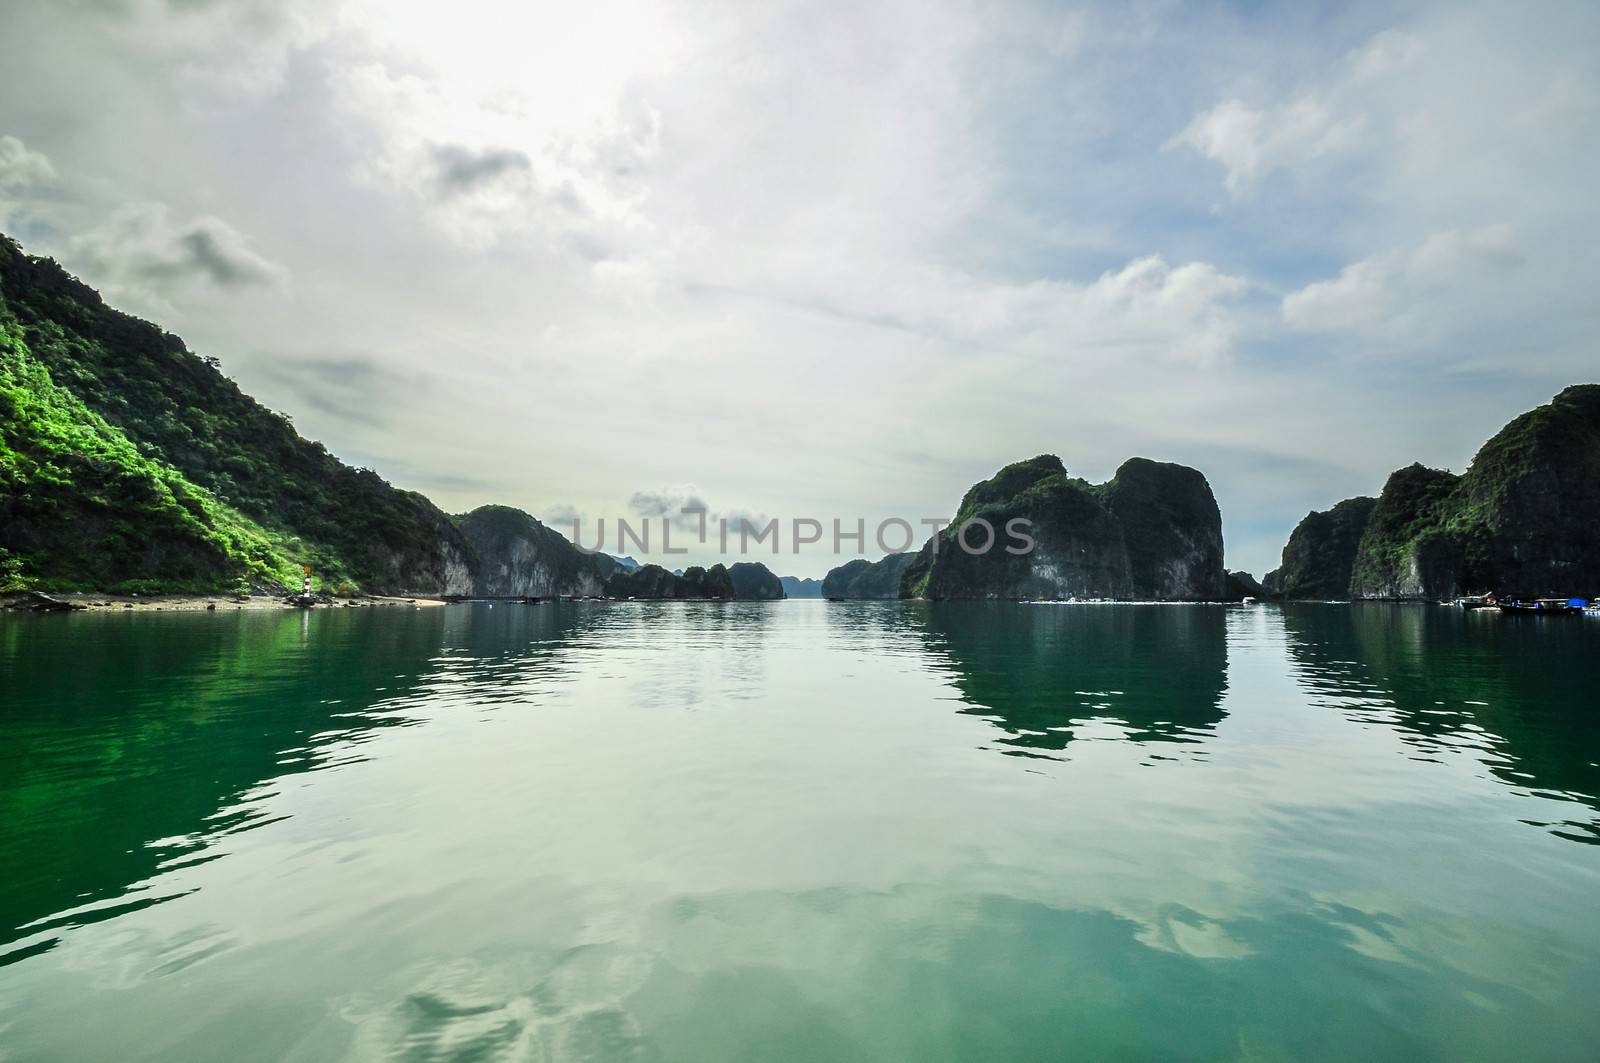 Picturesque sea landscape. Ha Long Bay, Vietnam by weltreisendertj